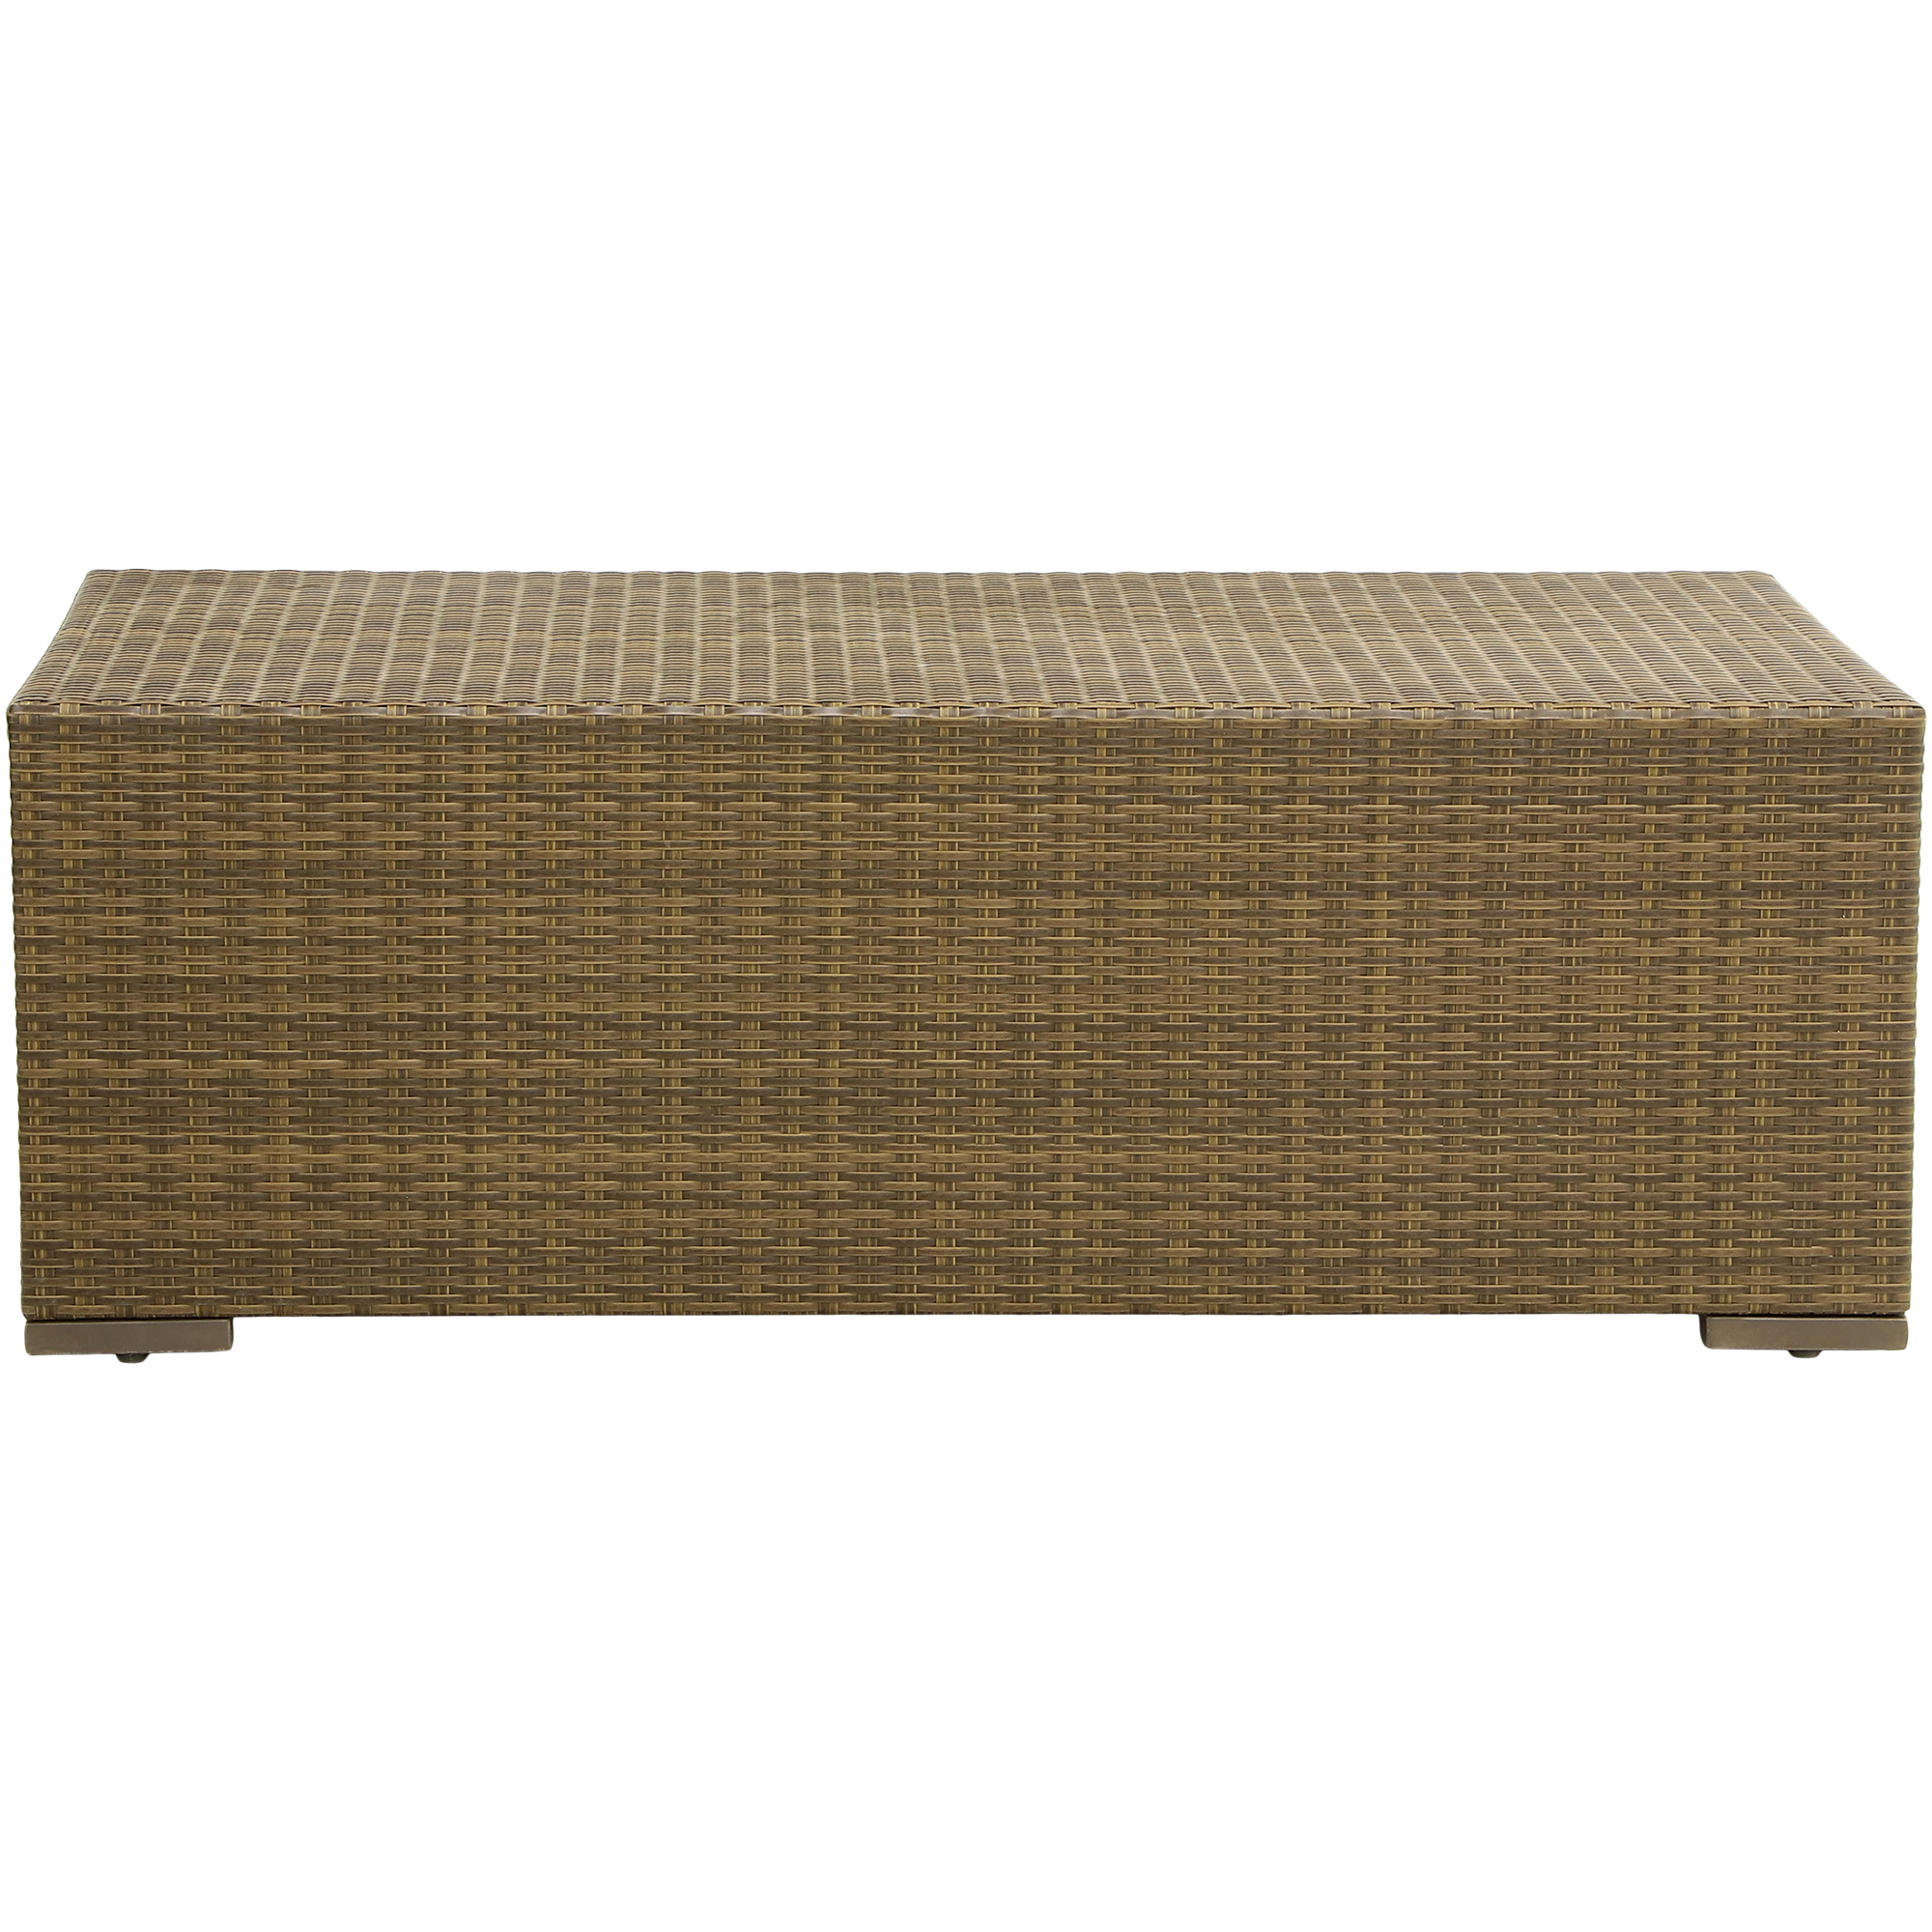 Комплект мебели Ronica Toulon 4 предмета, цвет коричневый, размер 100х240х82 - фото 12